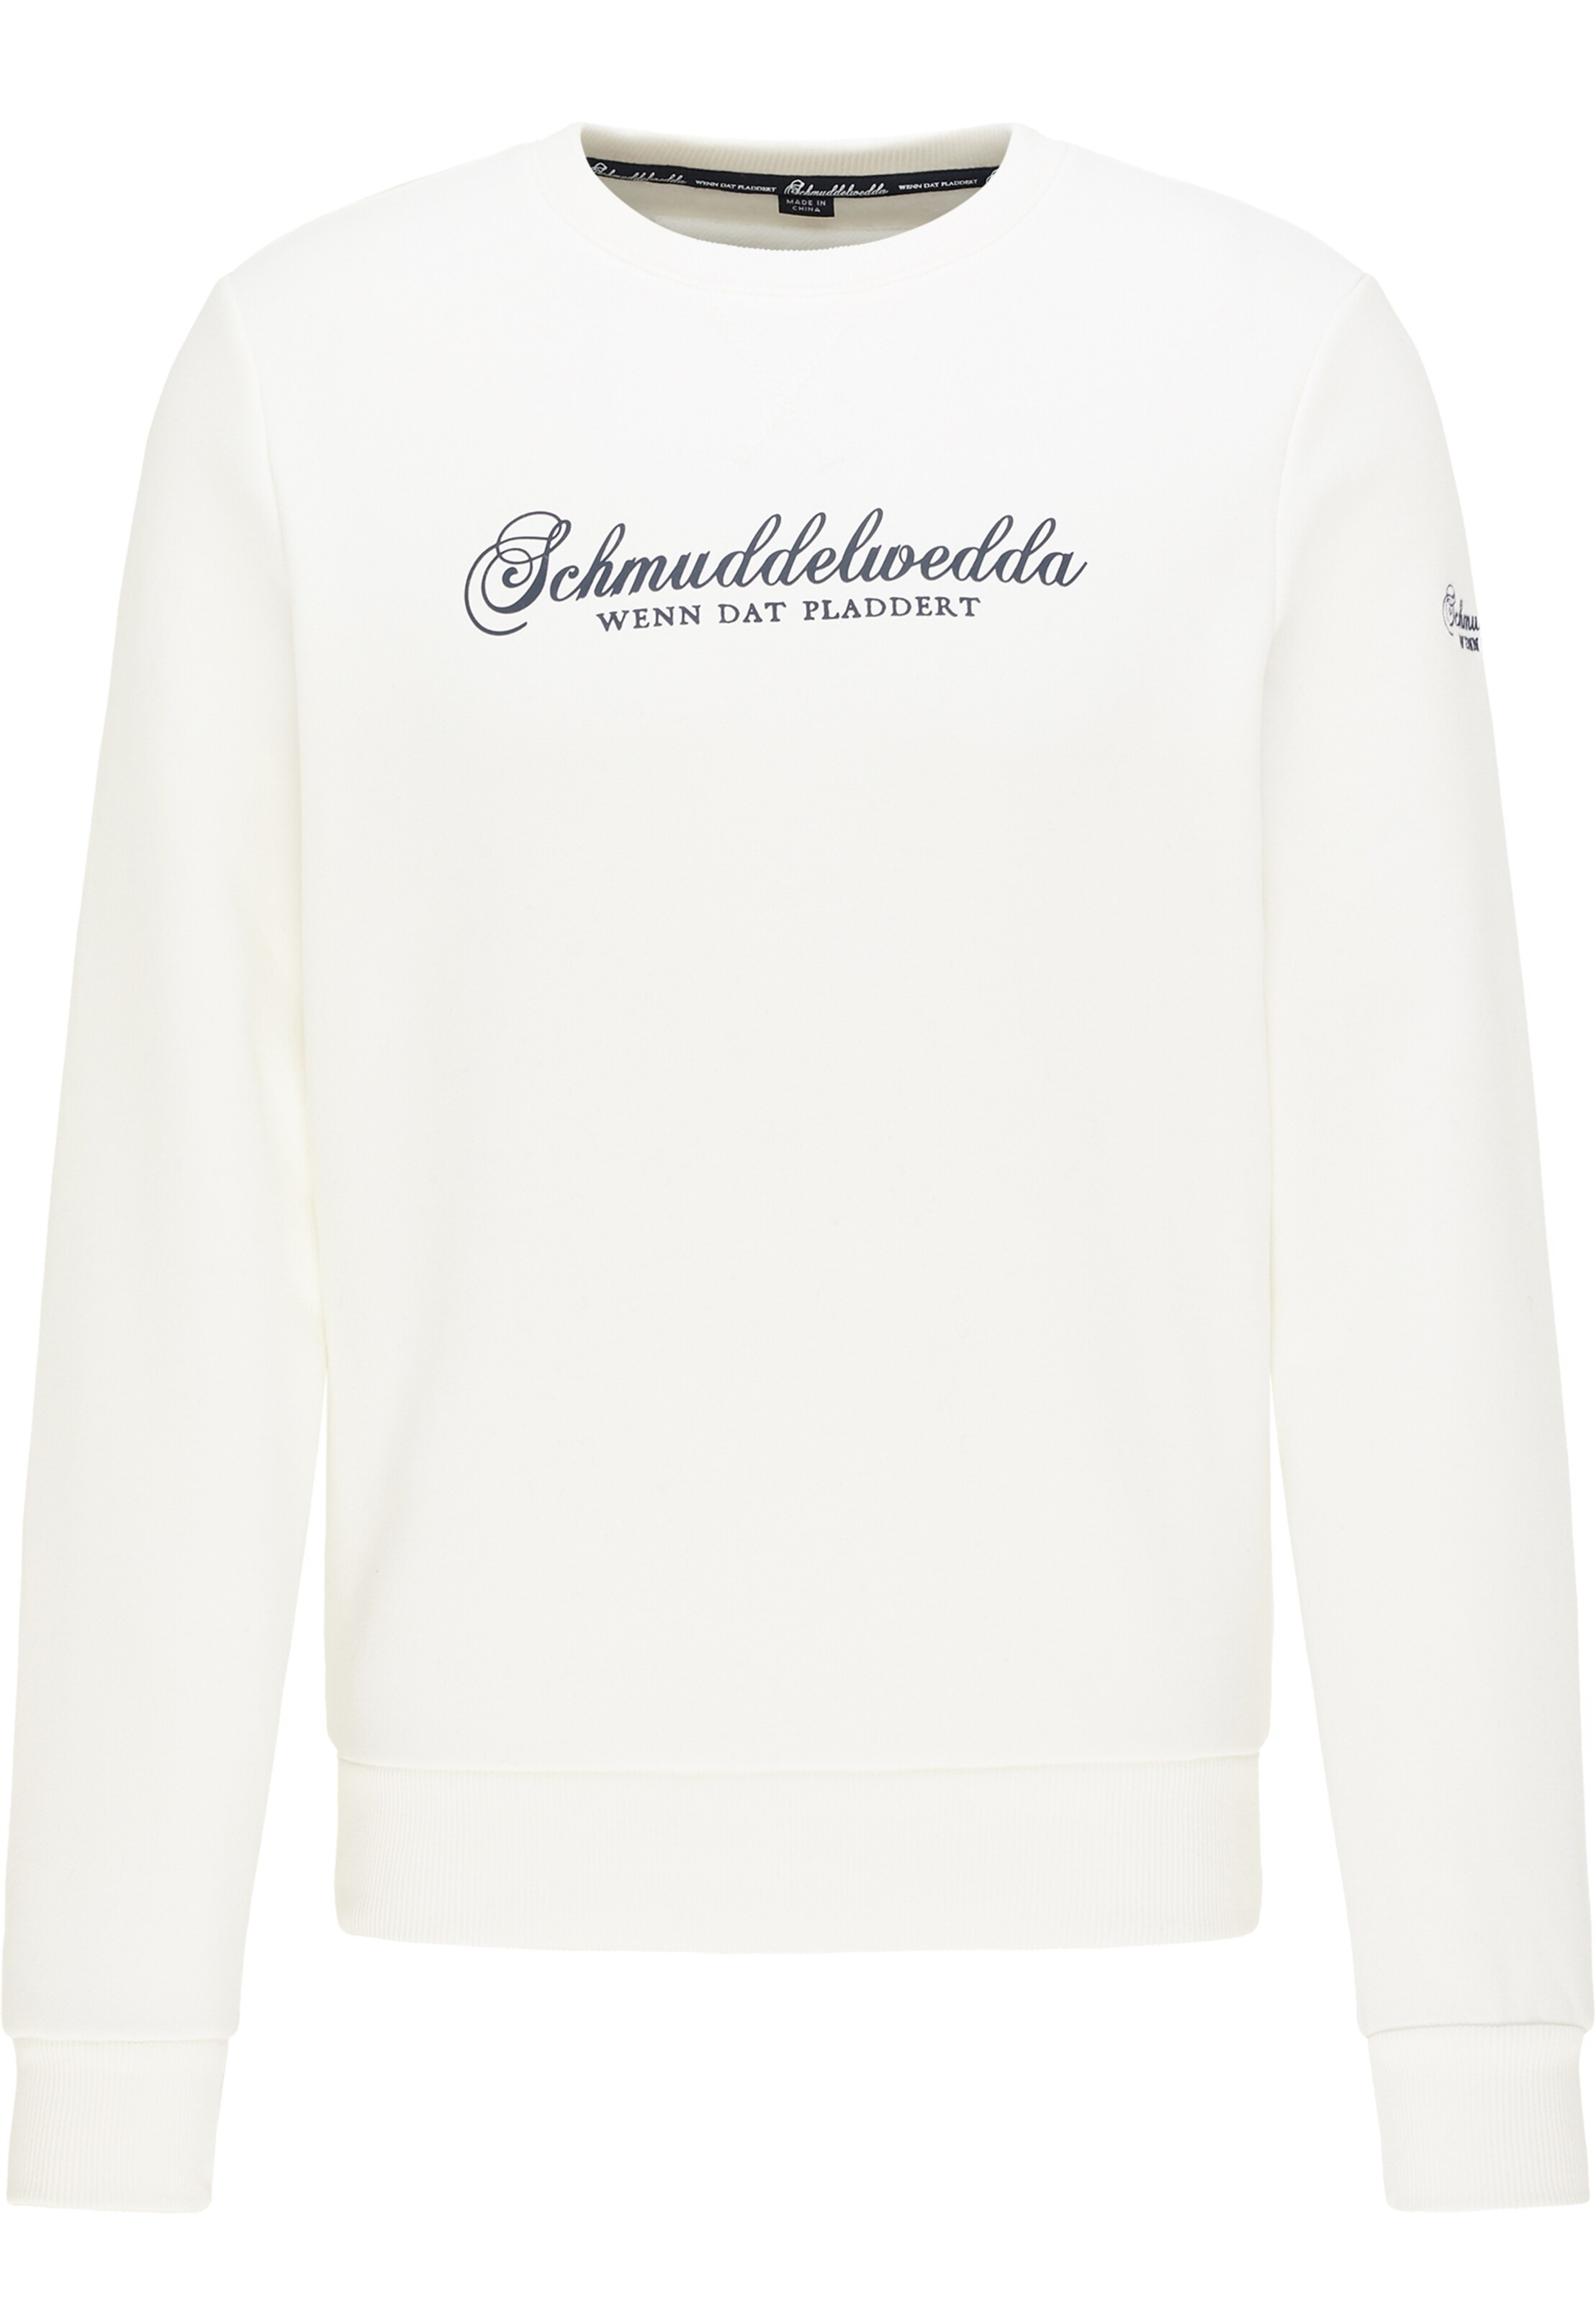 Männer Sweat Schmuddelwedda Sweatshirt in Weiß - QG81157